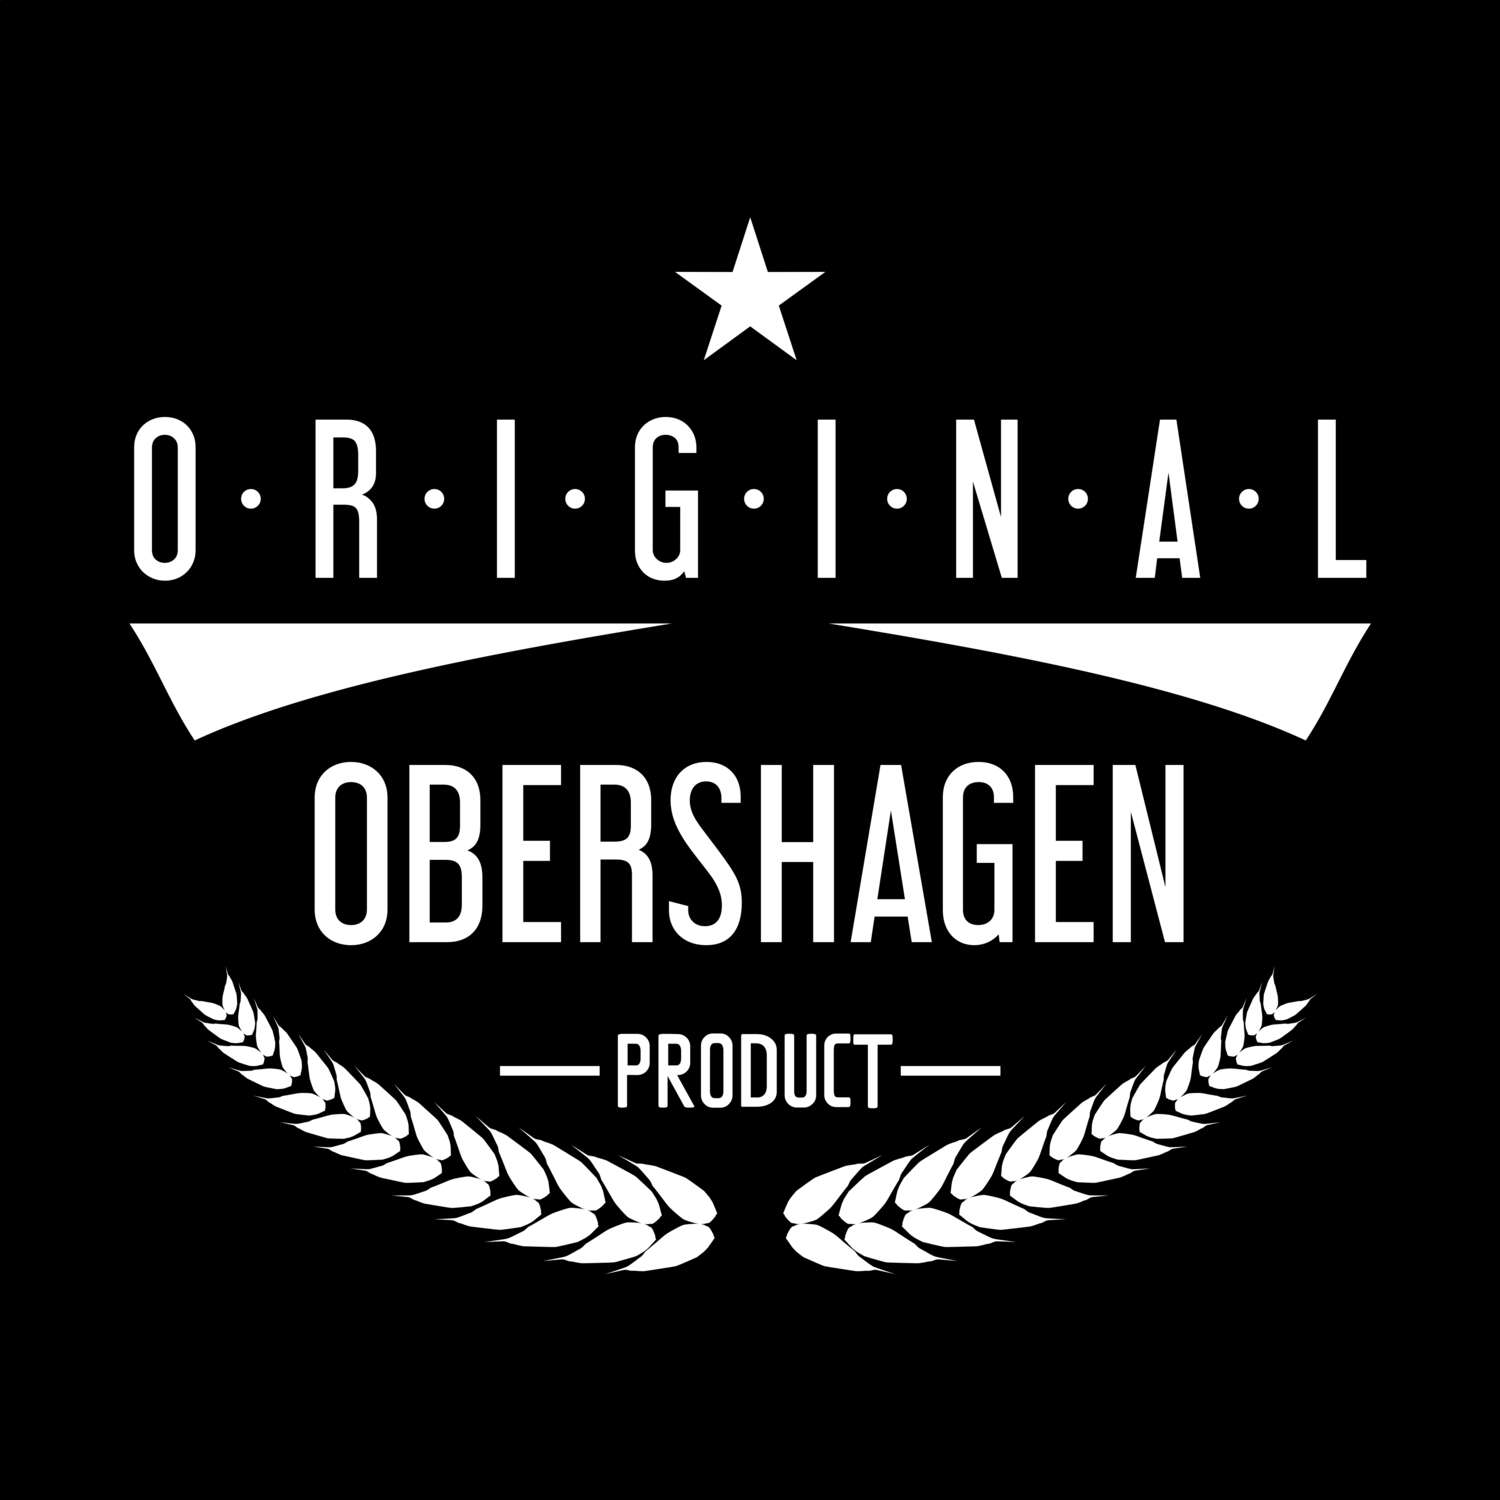 Obershagen T-Shirt »Original Product«